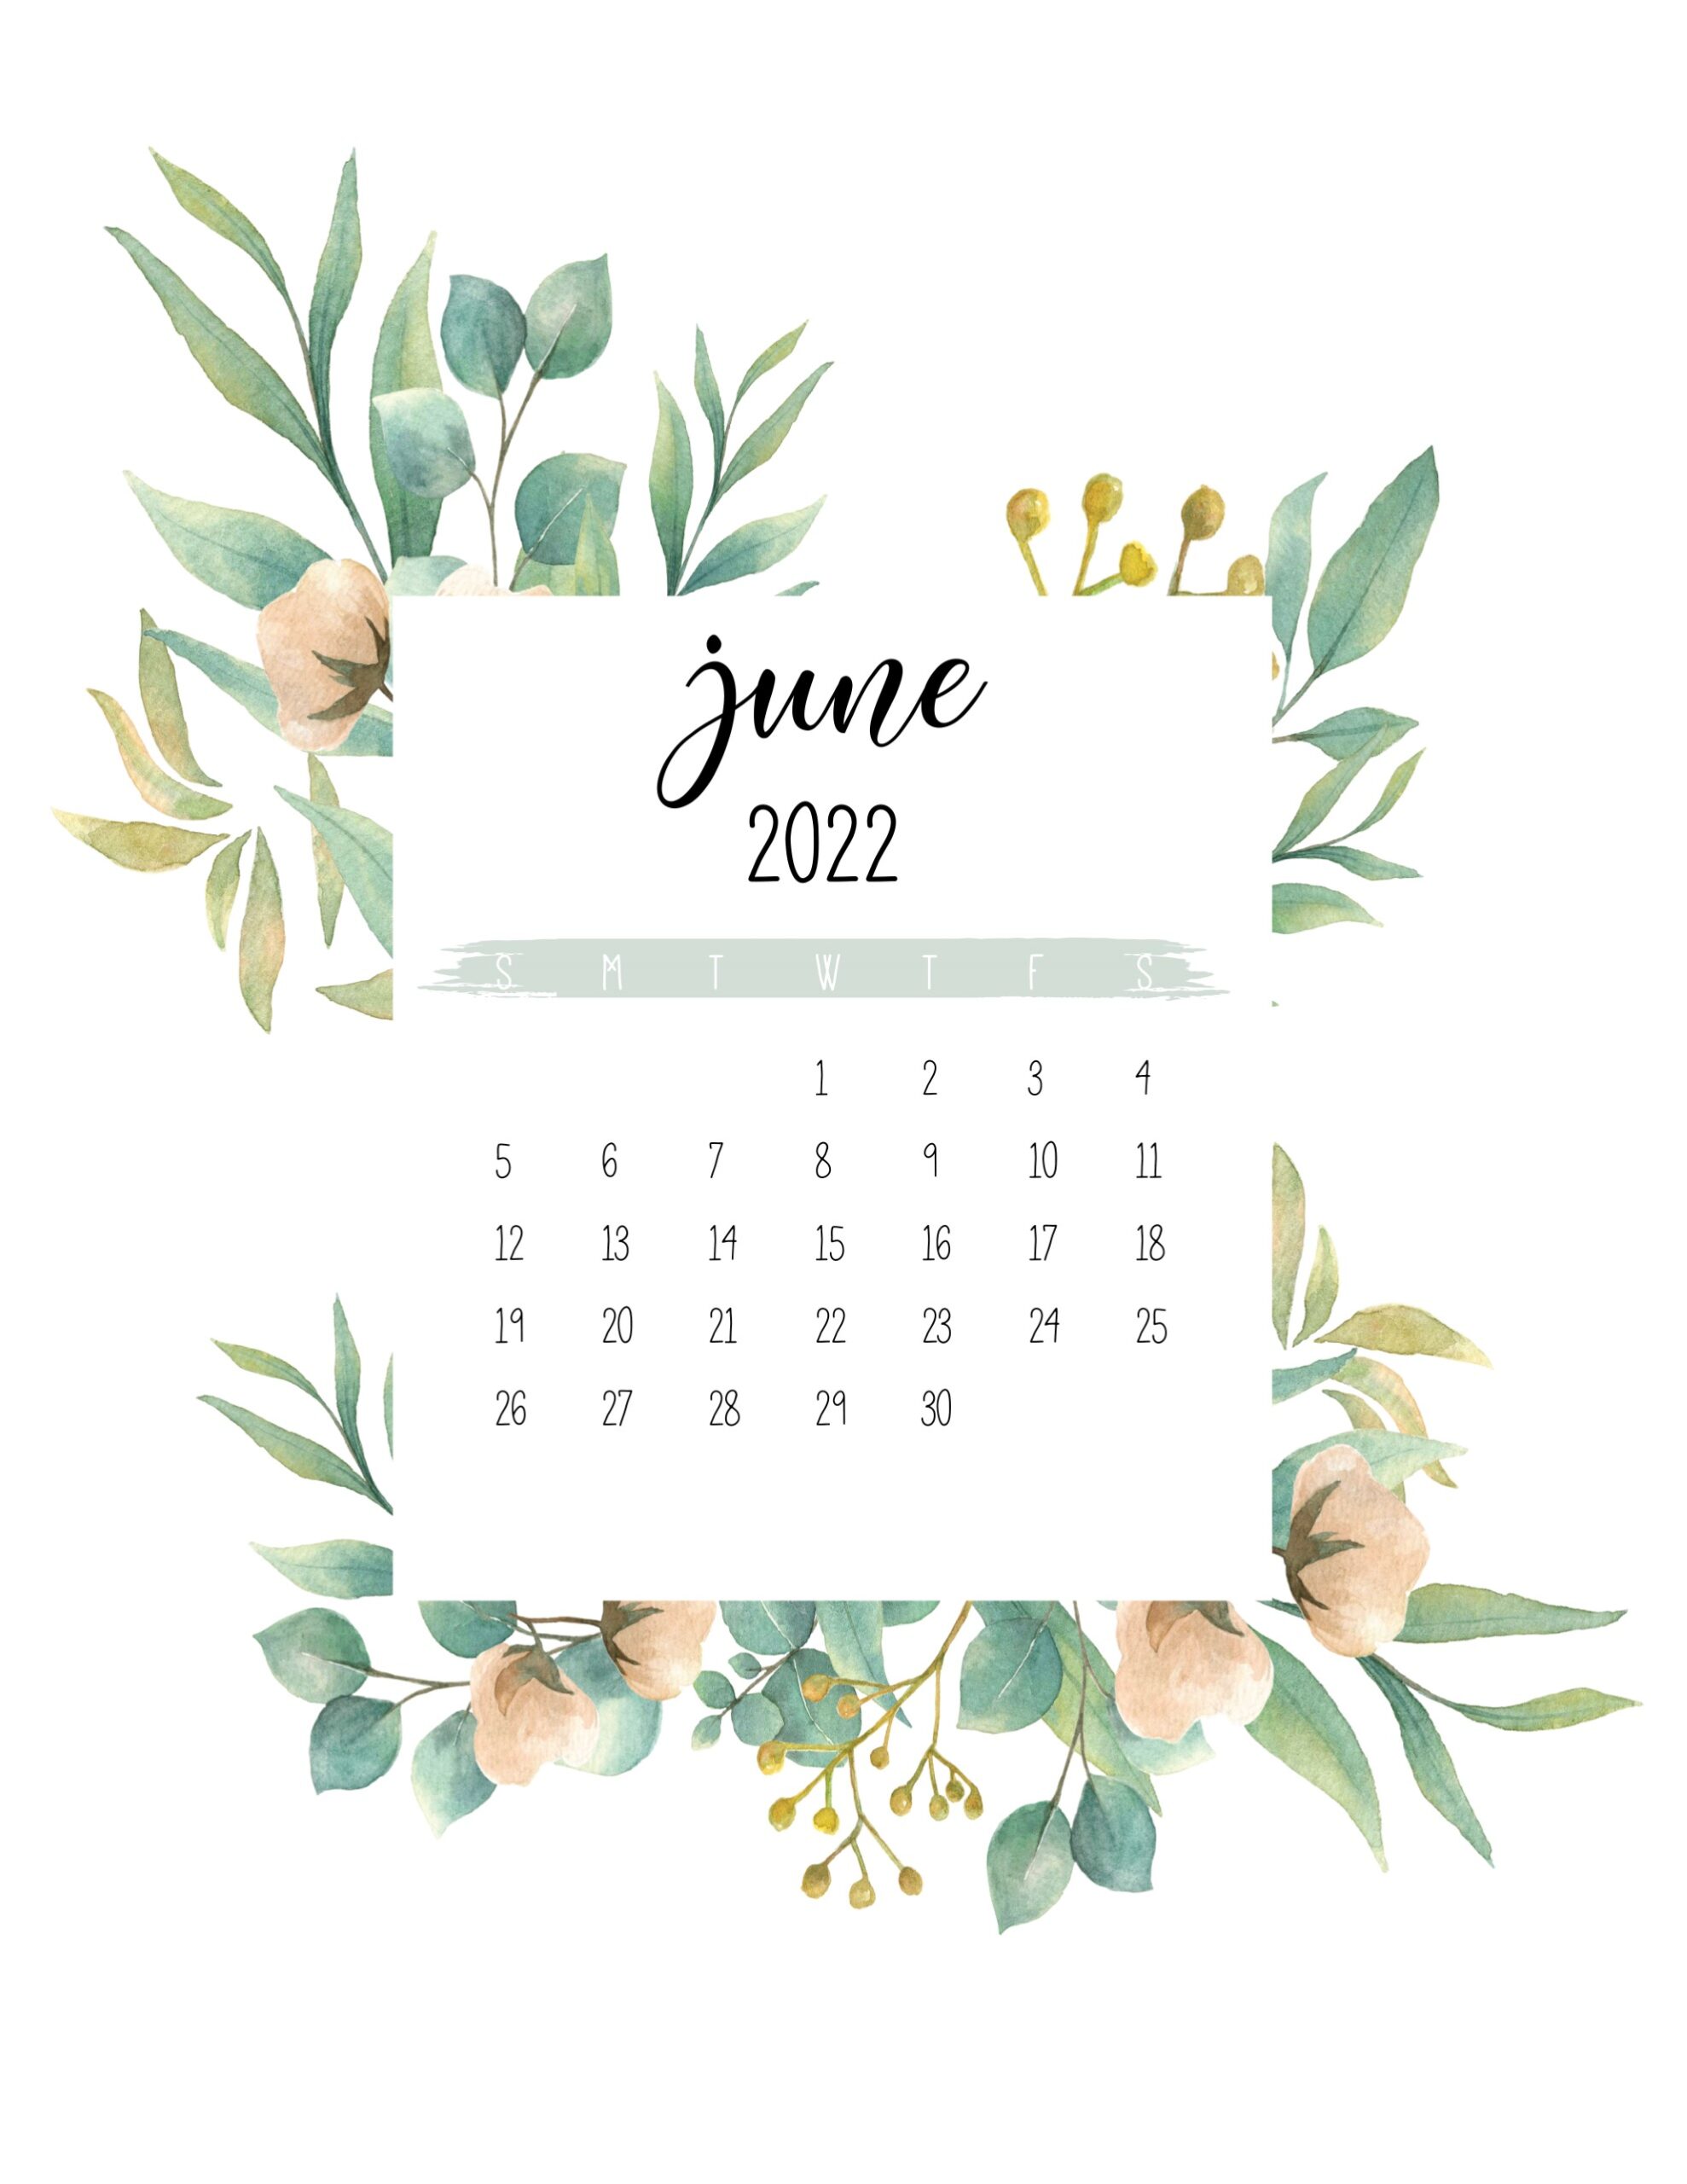 June 2022 Calendar Wallpaper Free Printable June 2022 Calendars - 100'S Of Styles - All Free!